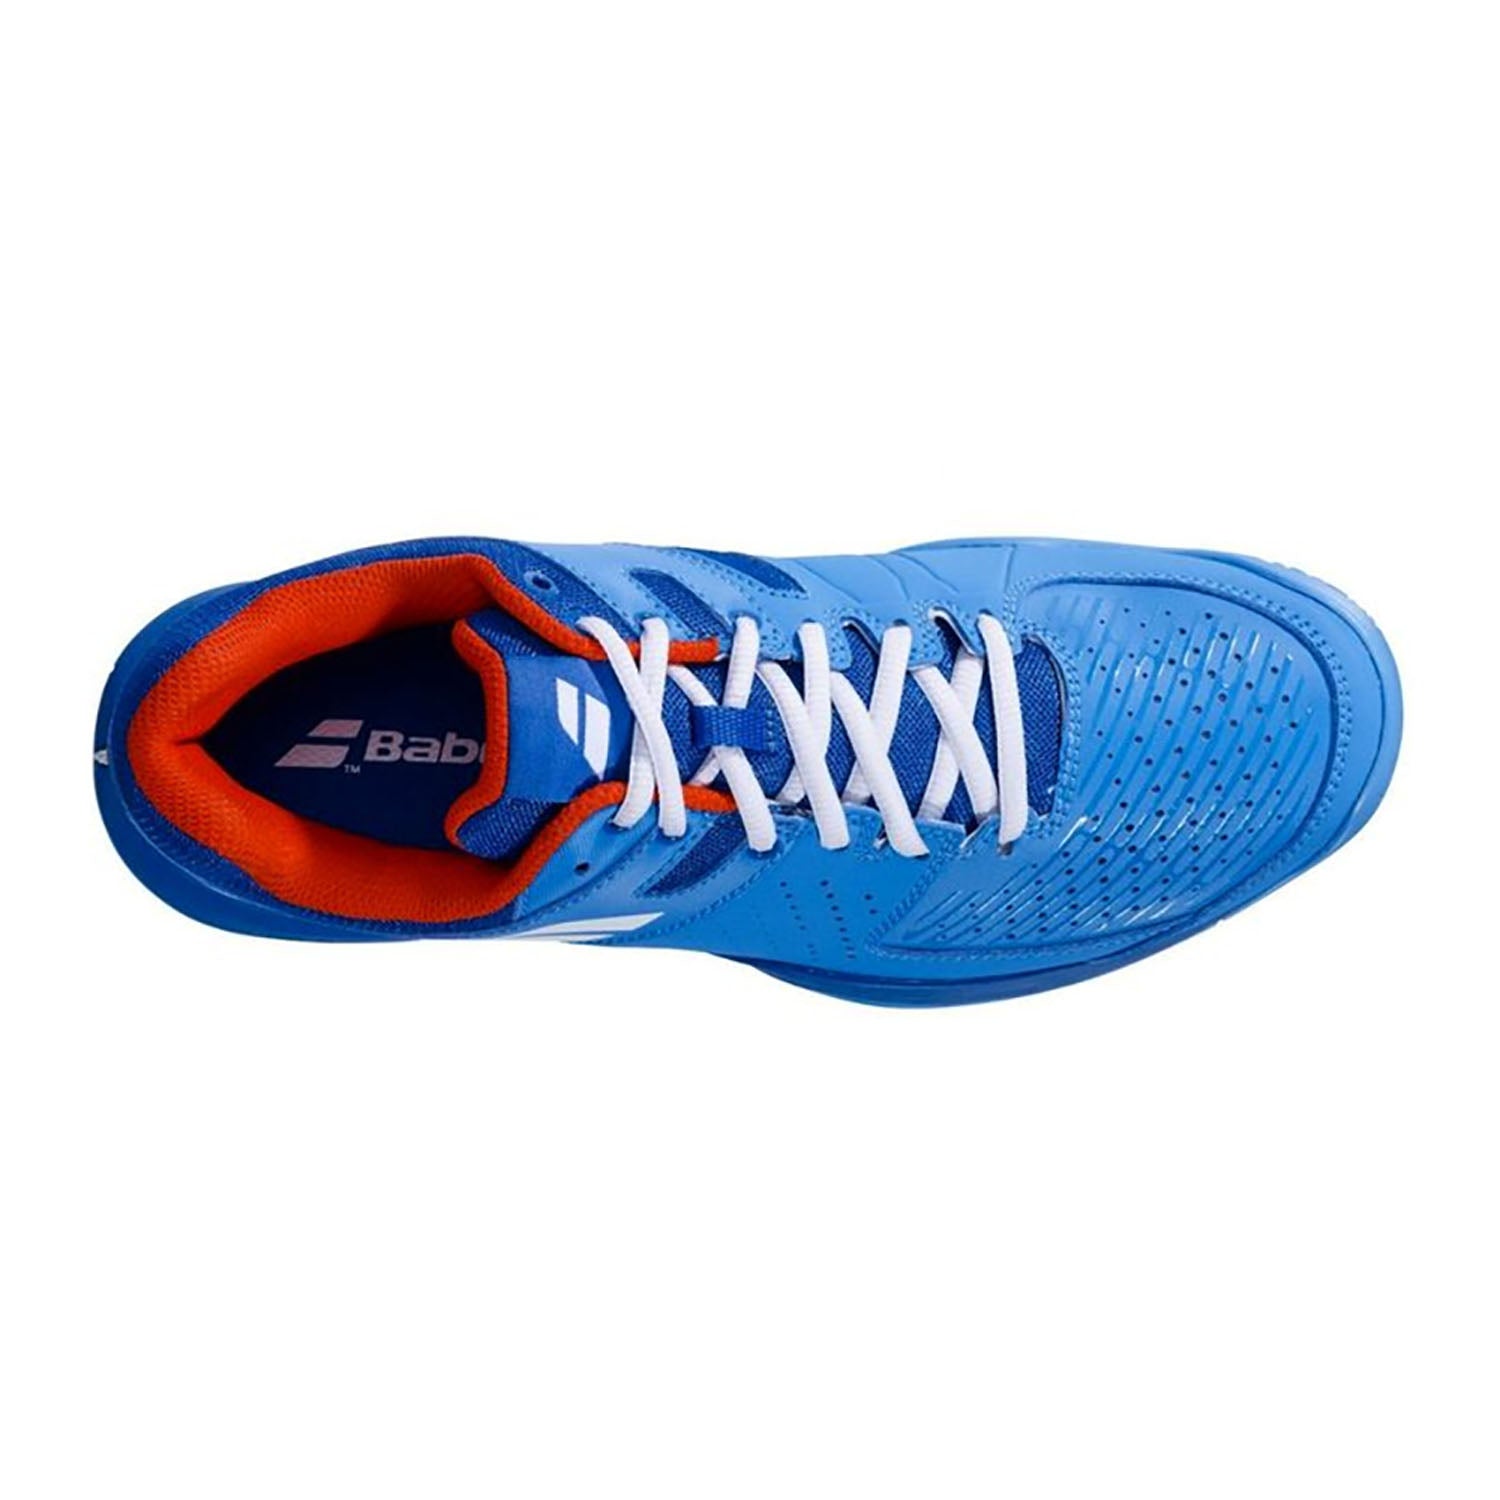 Babolat Cud Pulsion All Court Men Tennis Shoe, Blue/White - Best Price online Prokicksports.com